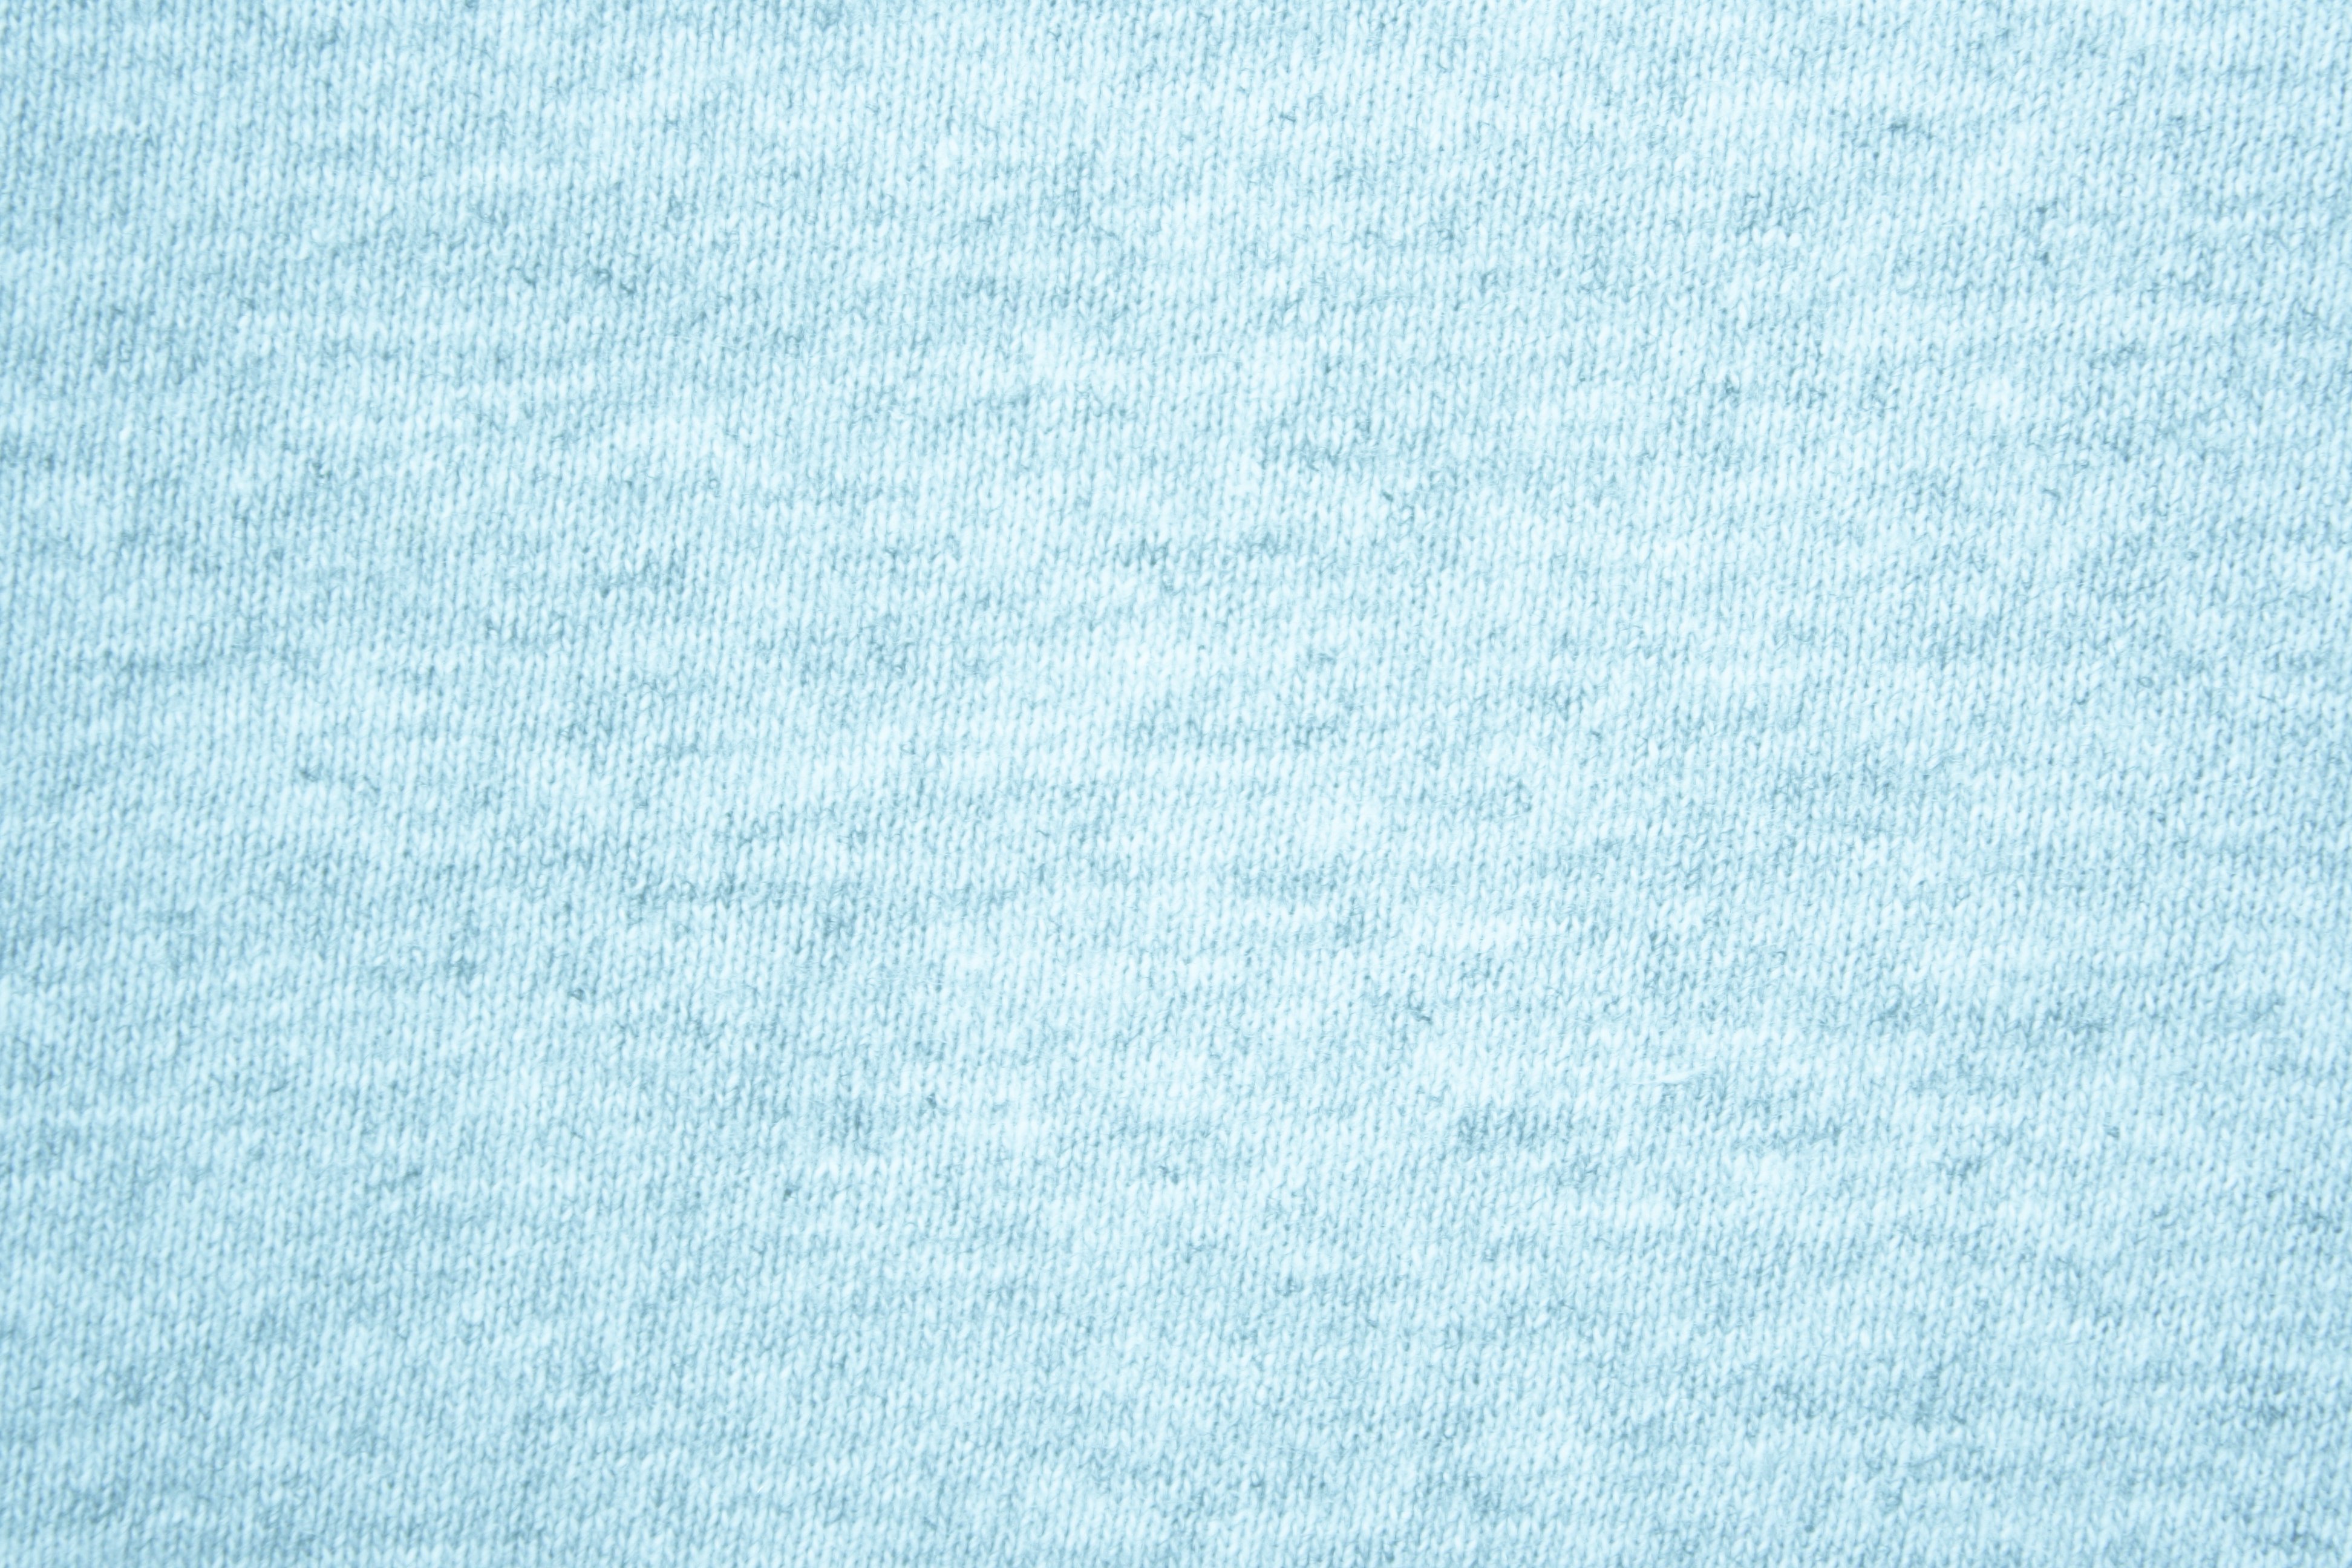 Blue Heather Knit T-Shirt Fabric Texture Picture Free Photograph Photos  Public Domain